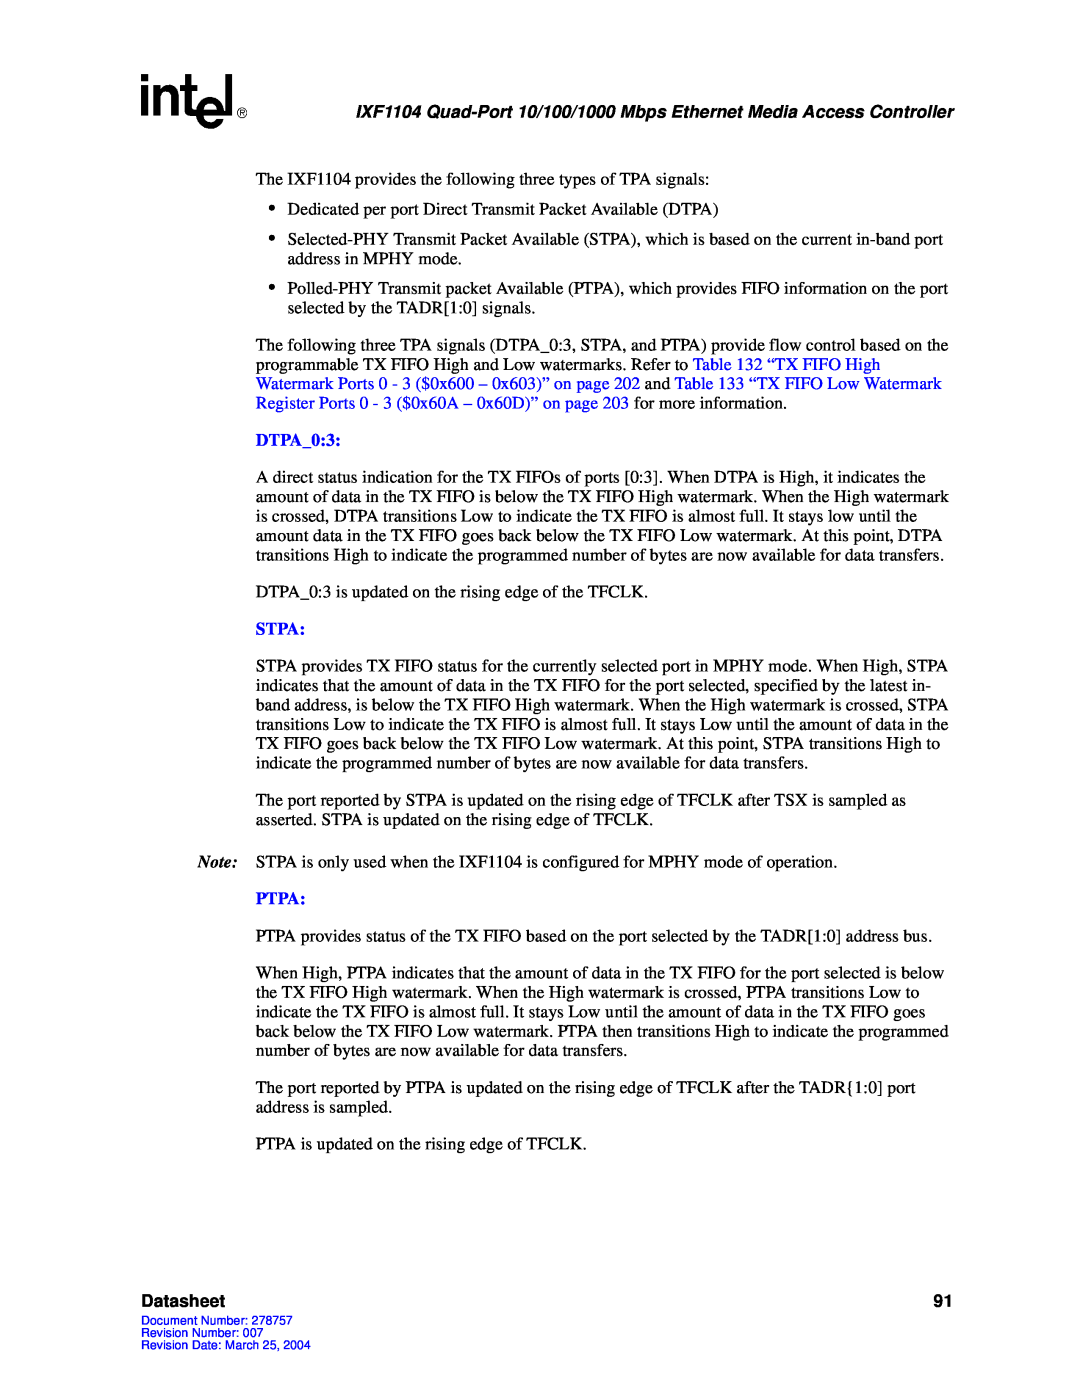 Intel IXF1104 manual DTPA_0:3, Stpa, Ptpa, Datasheet 